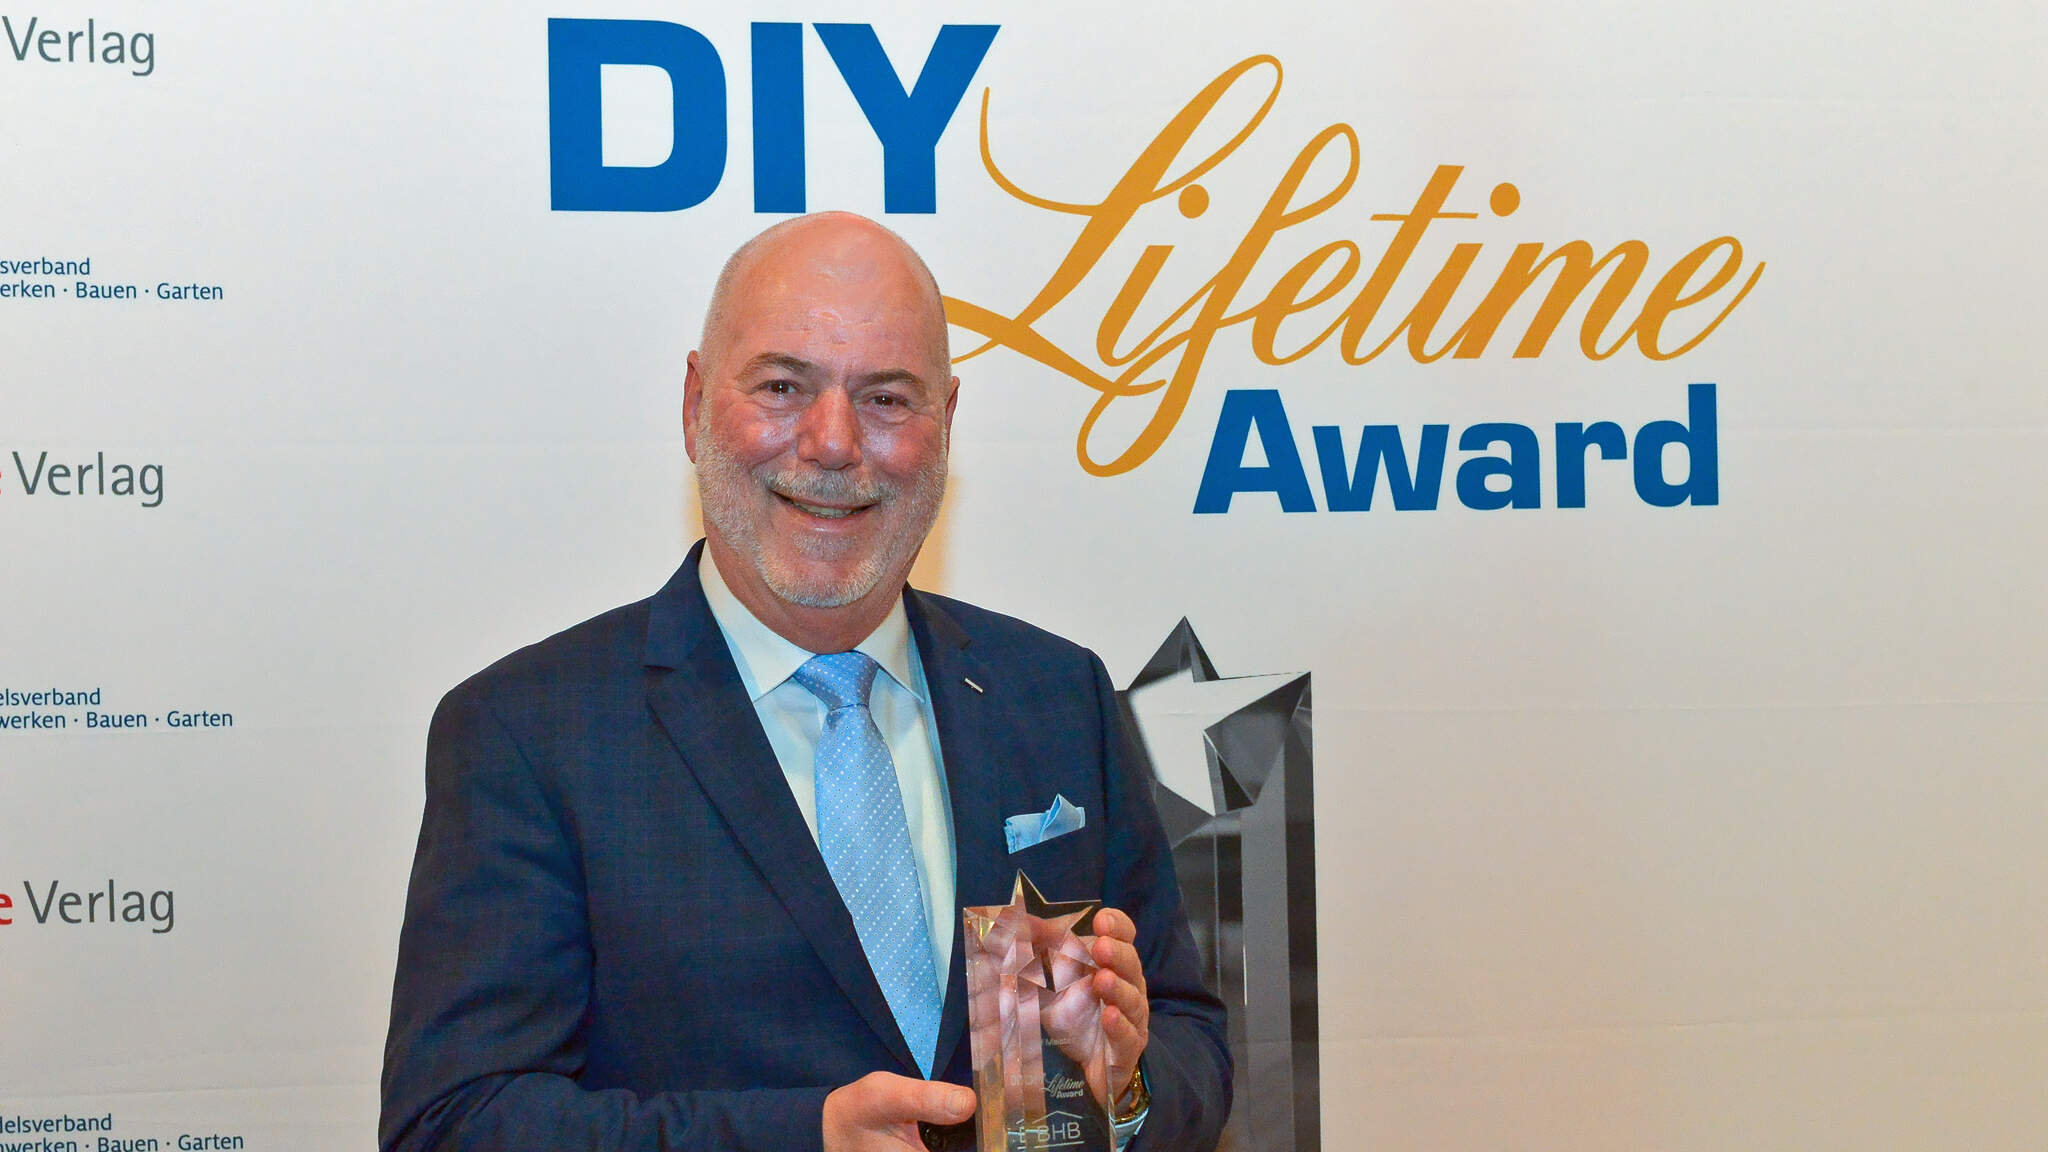 Ralf Meistes reveives 2019 DIY-Lifetime Award